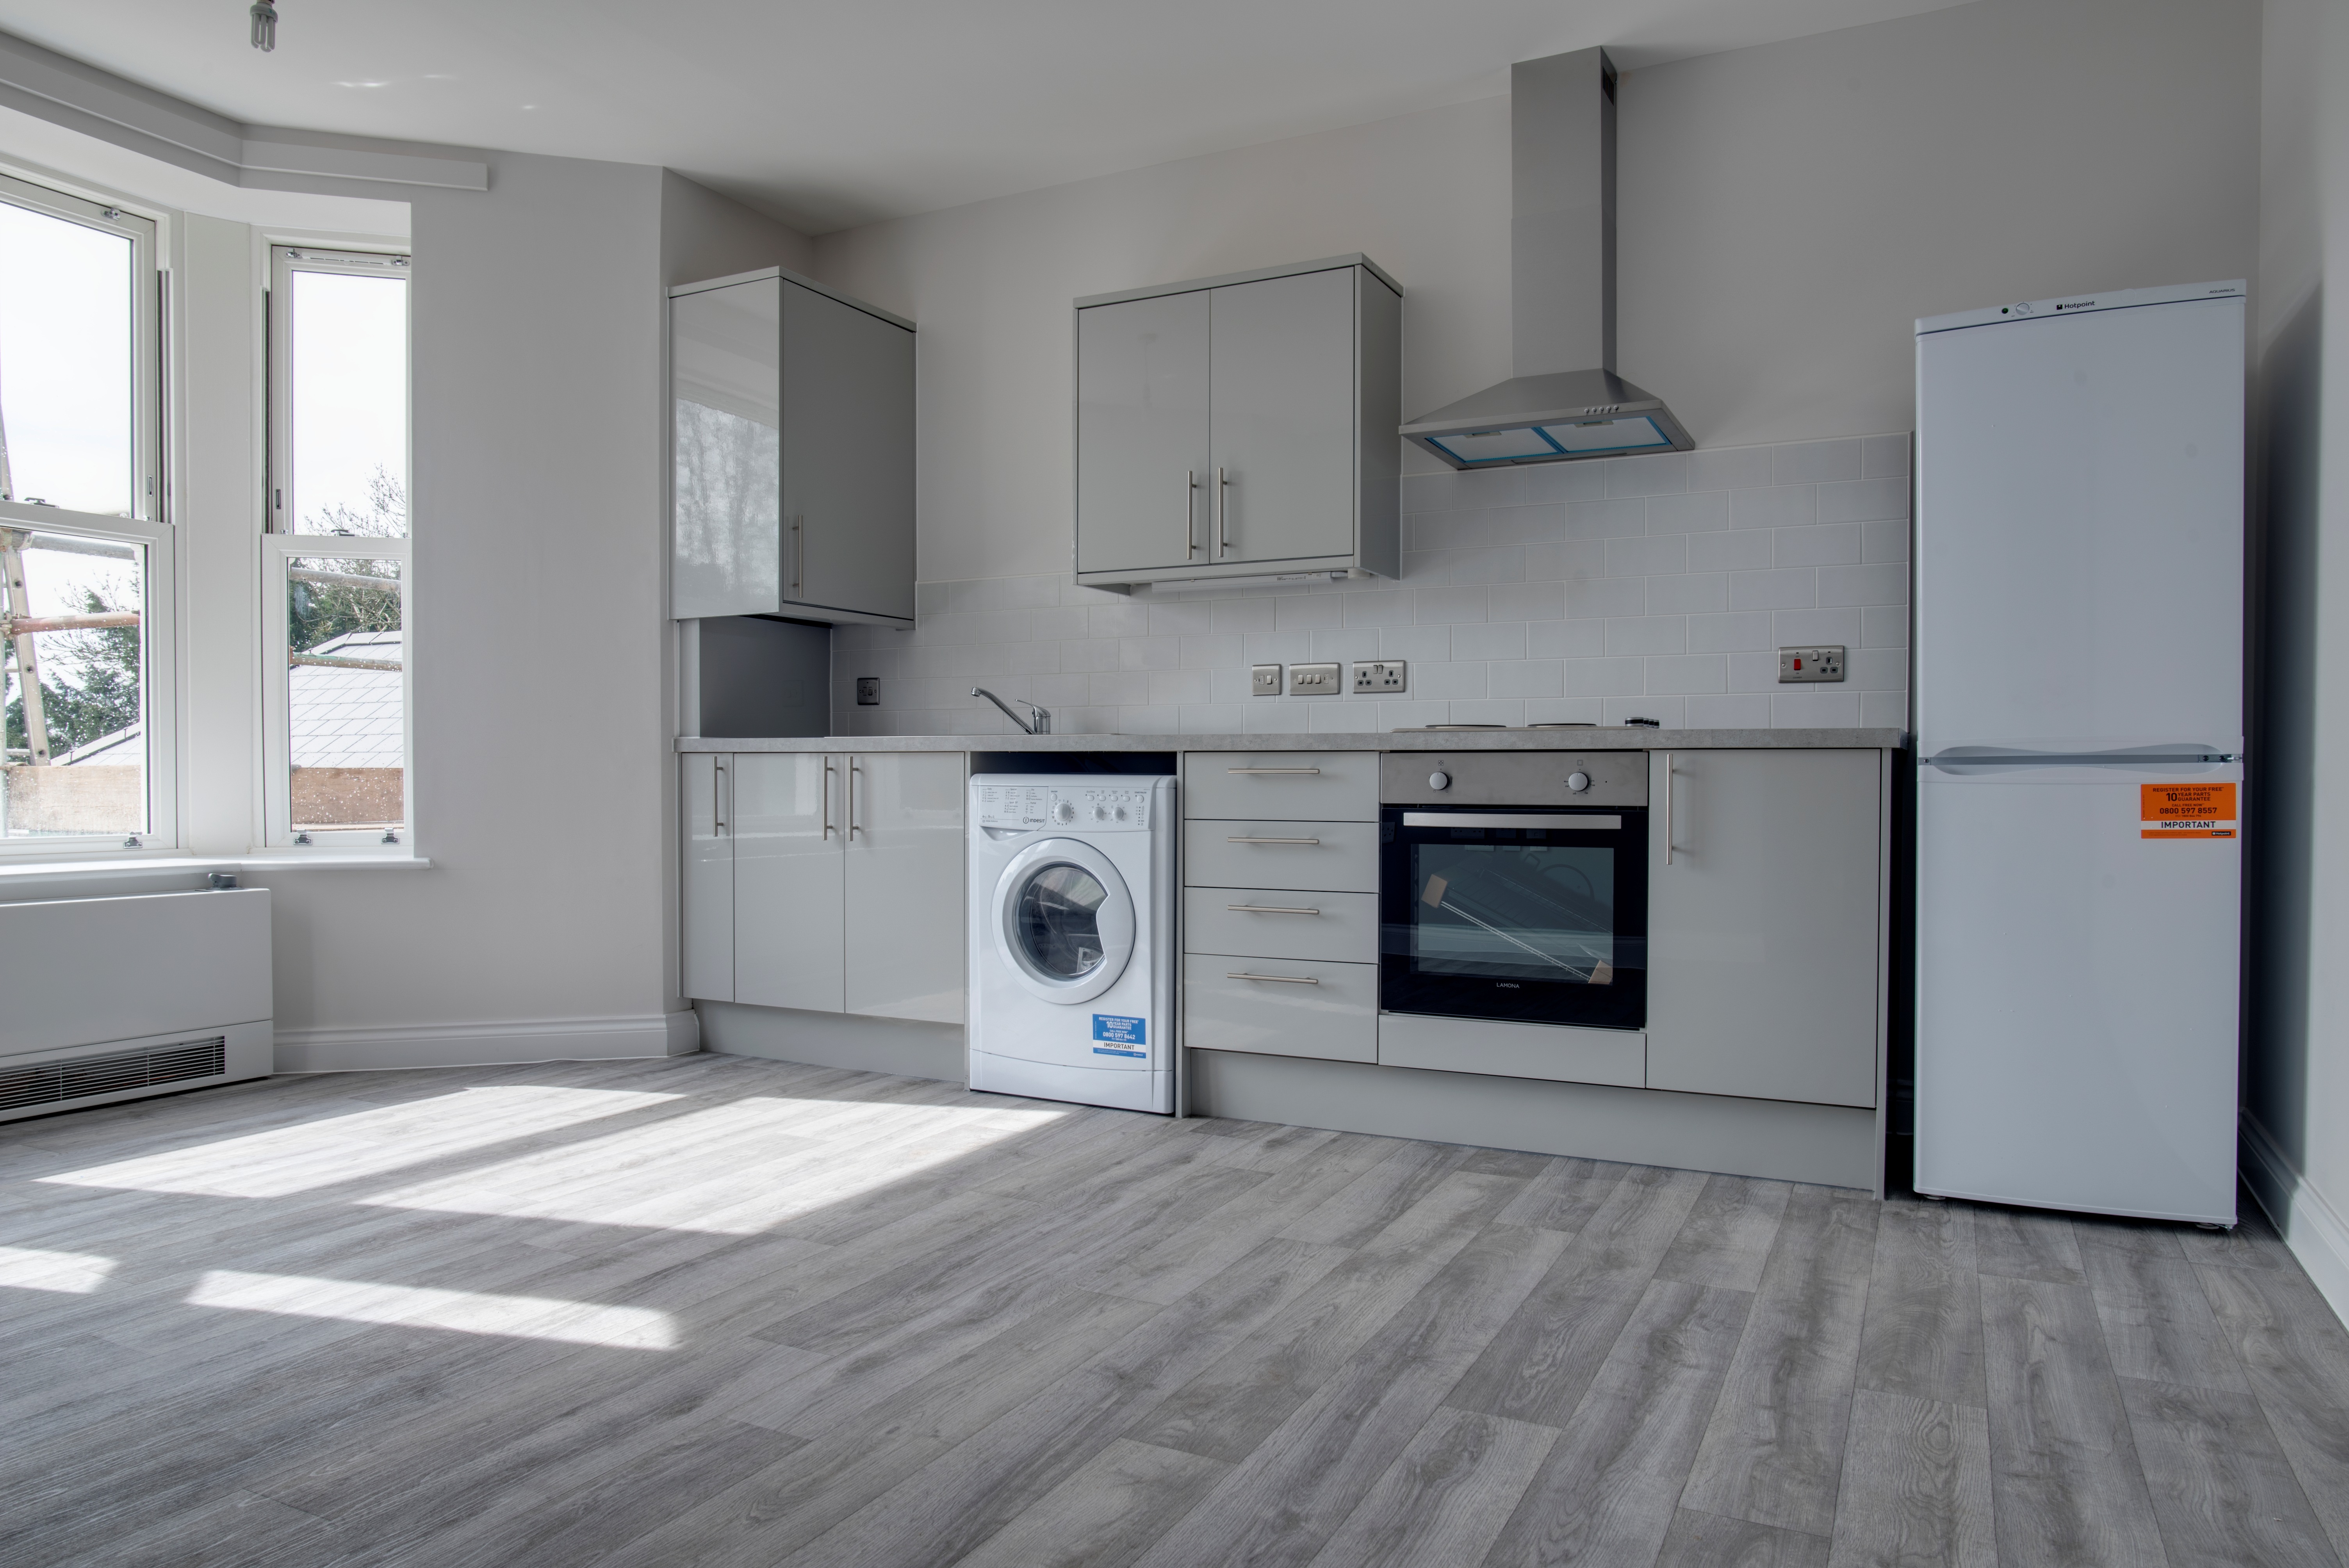 Polyflor flooring helps create modern social housing apartments in Newport